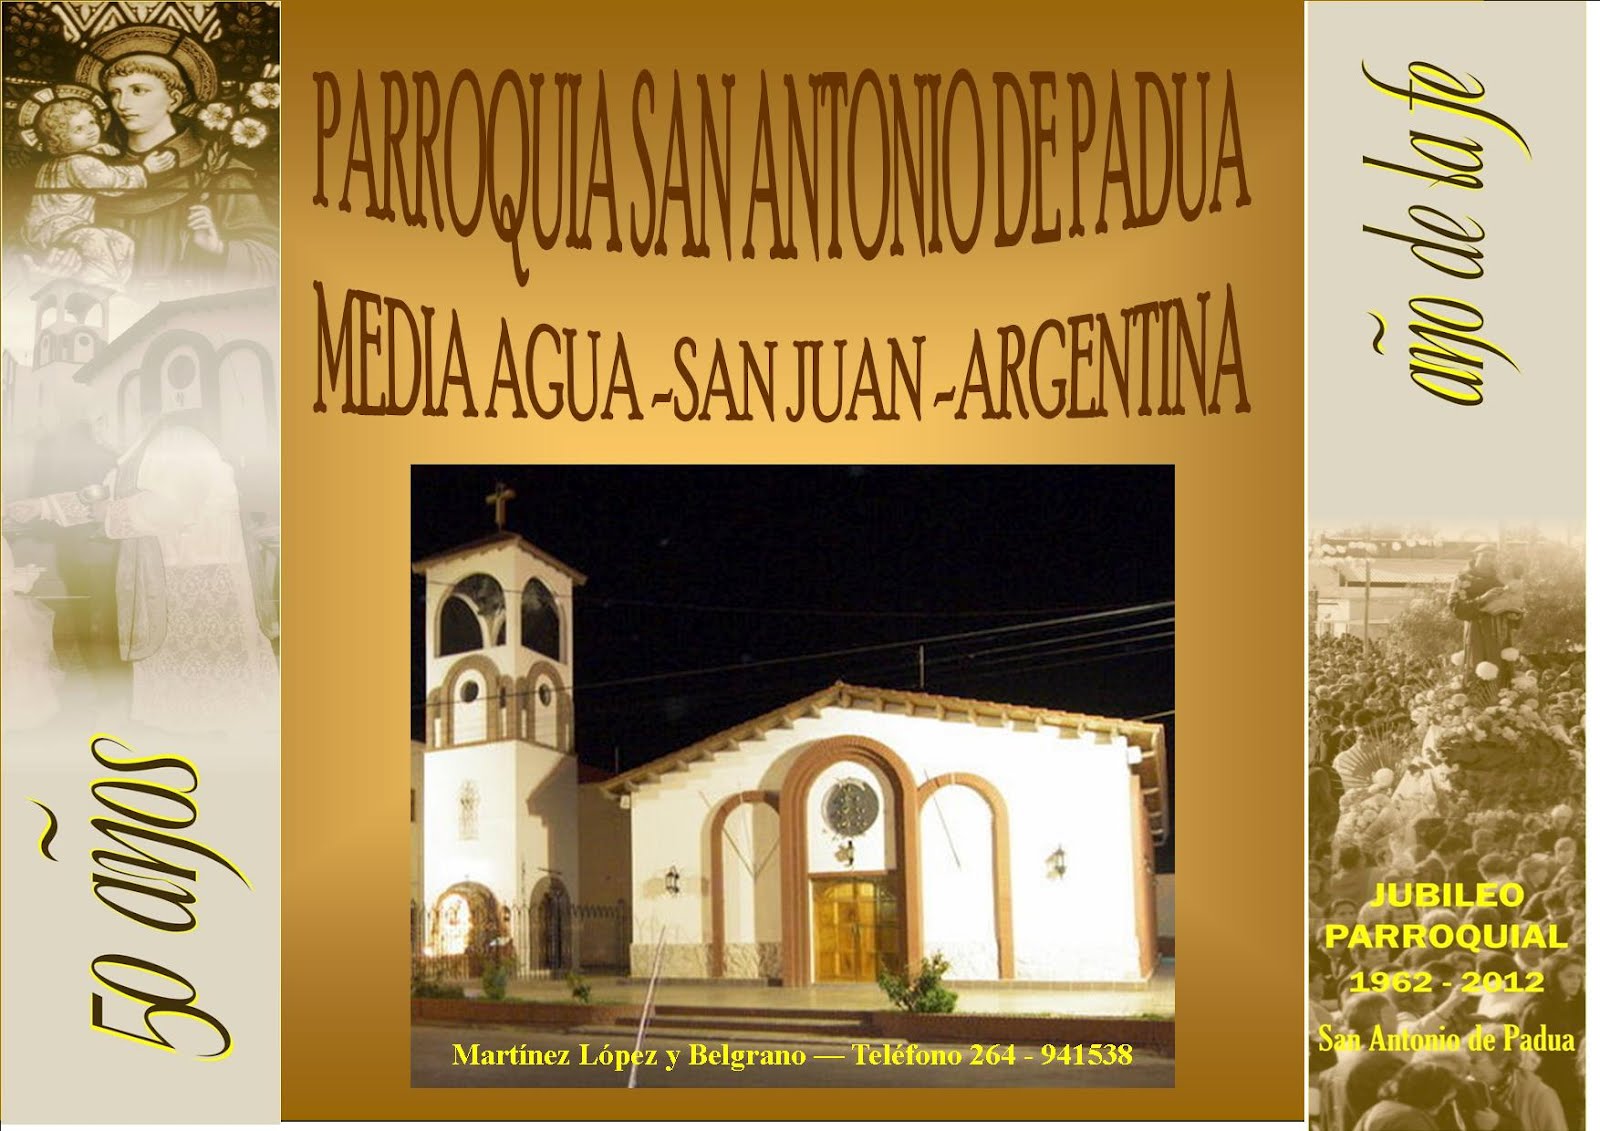 PARROQUIA SAN ANTONIO DE PADUA - MEDIA AGUA - SAN JUAN - ARGENTINA